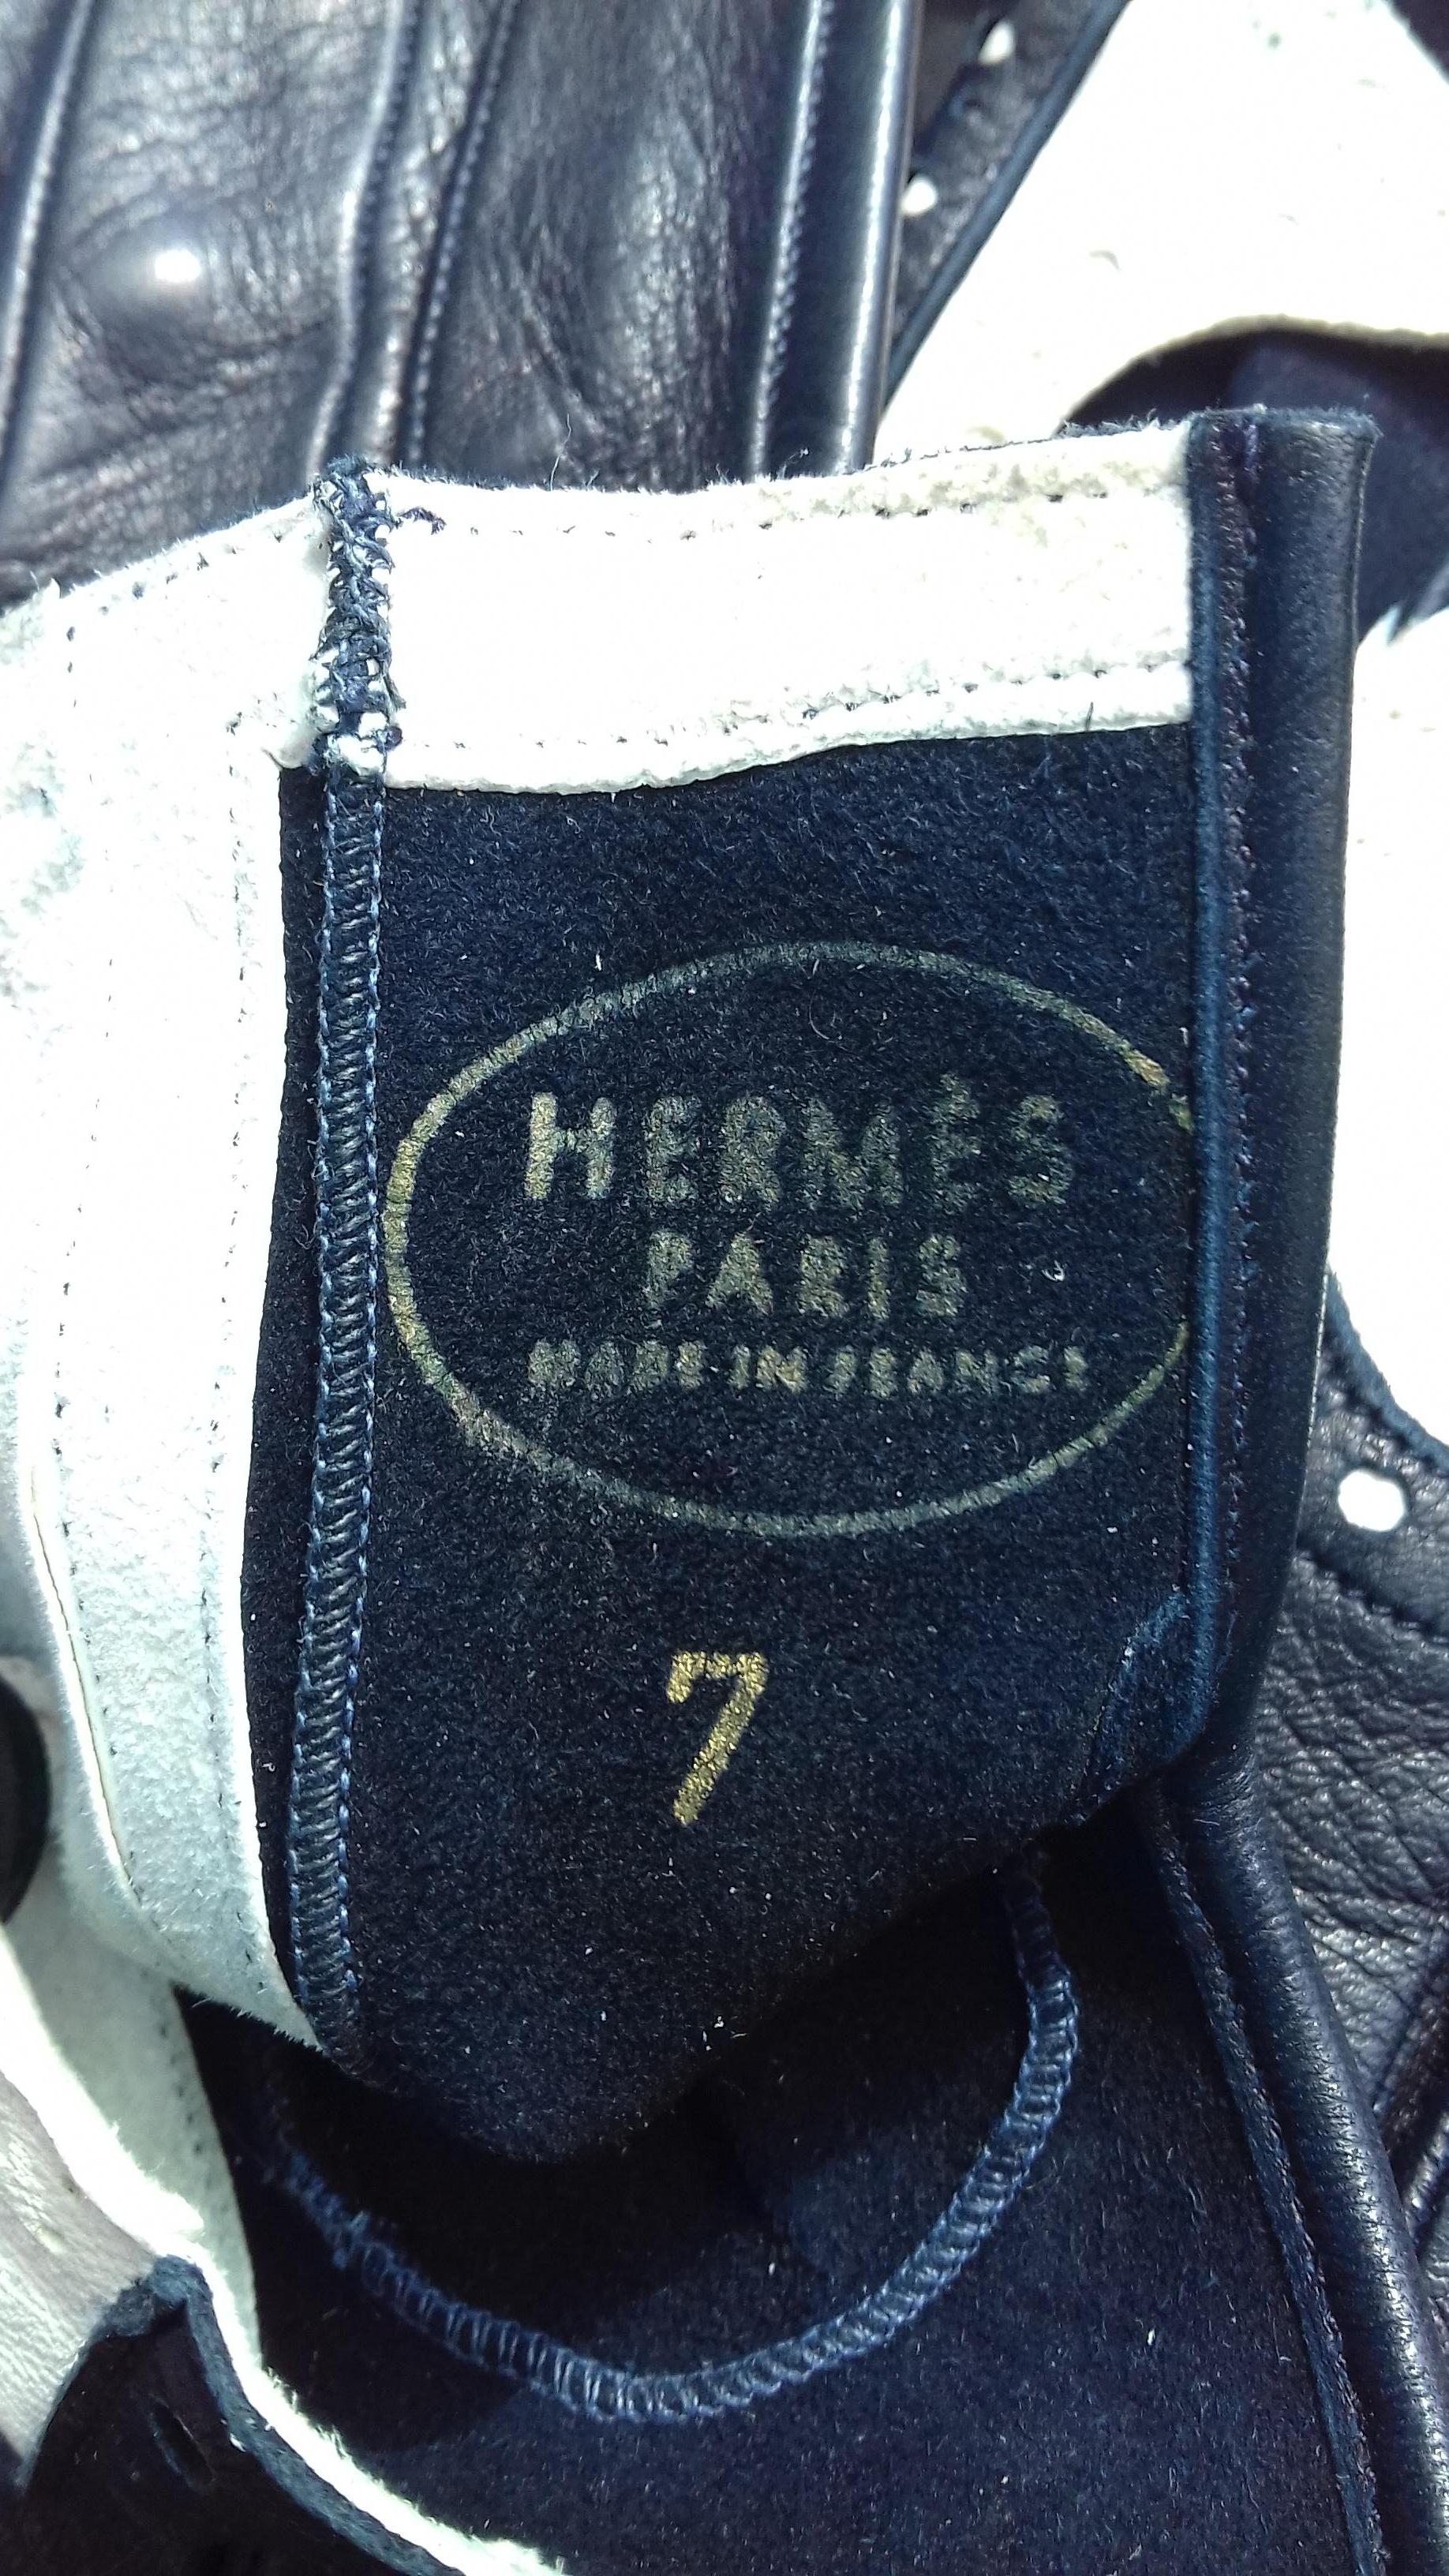 Hermès Gloves Dark Blue and White Leather Gloves Ghillies Size 6/7 2